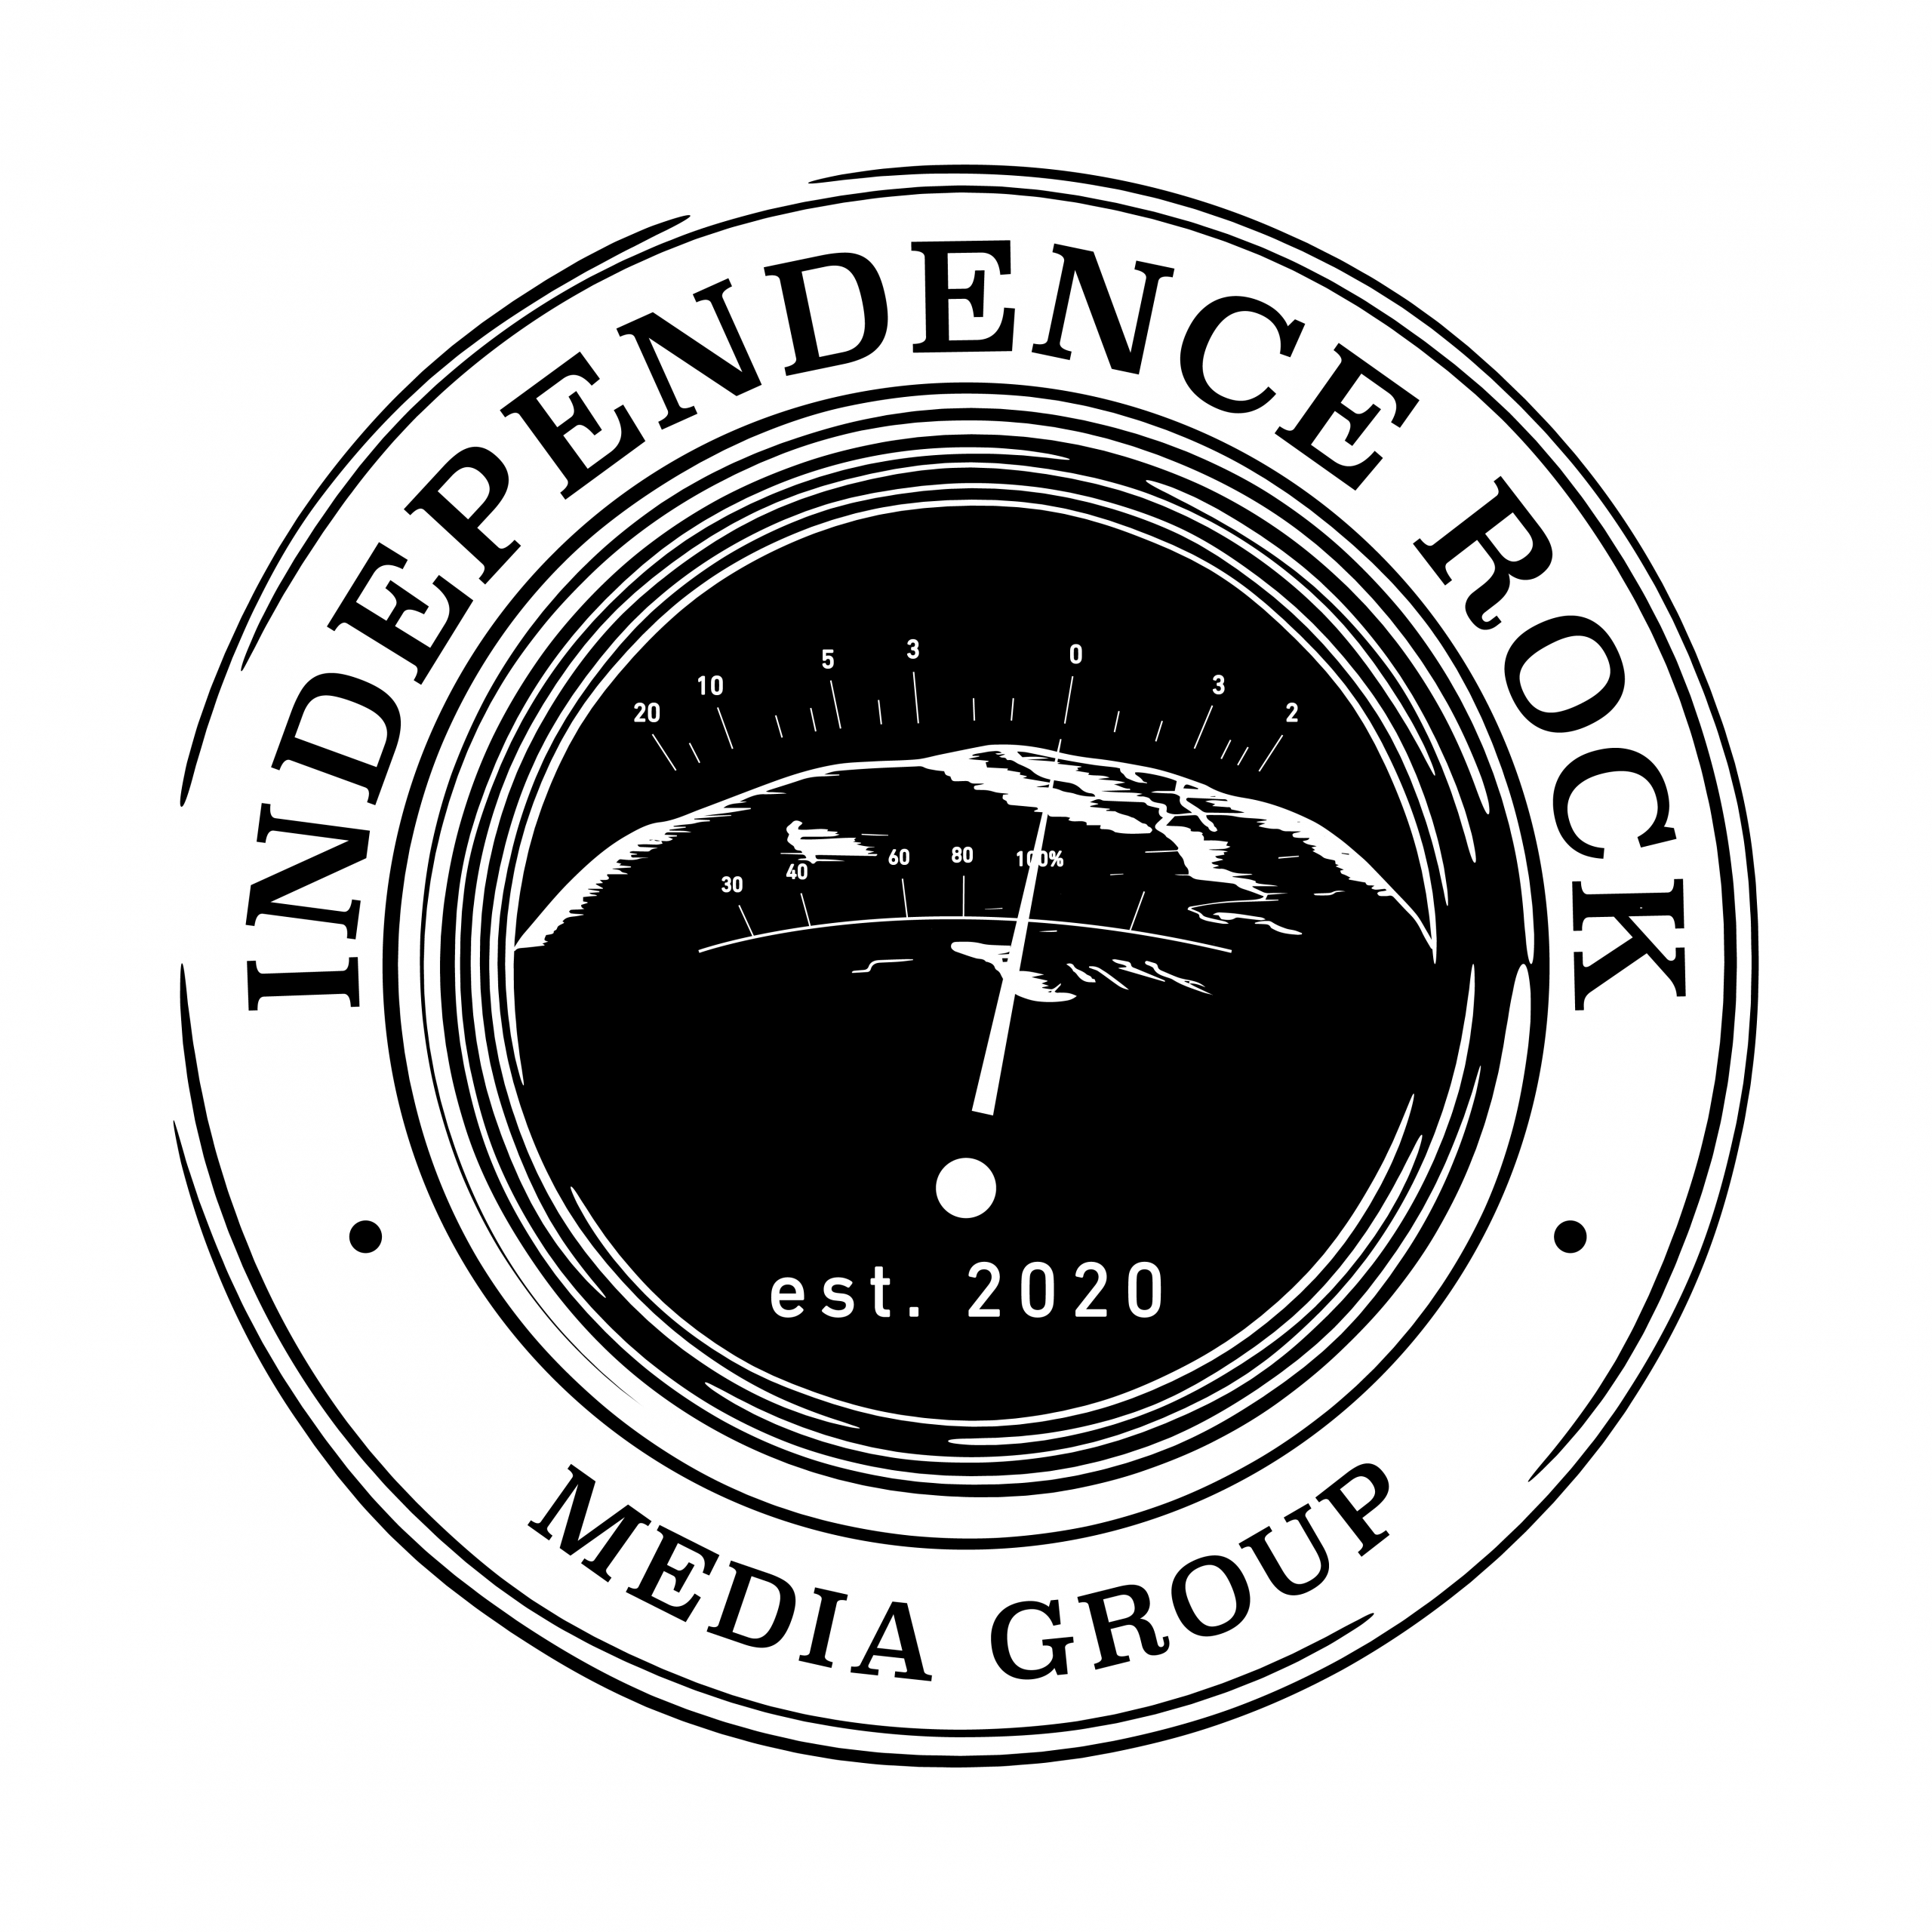 Independence Rock Media Group